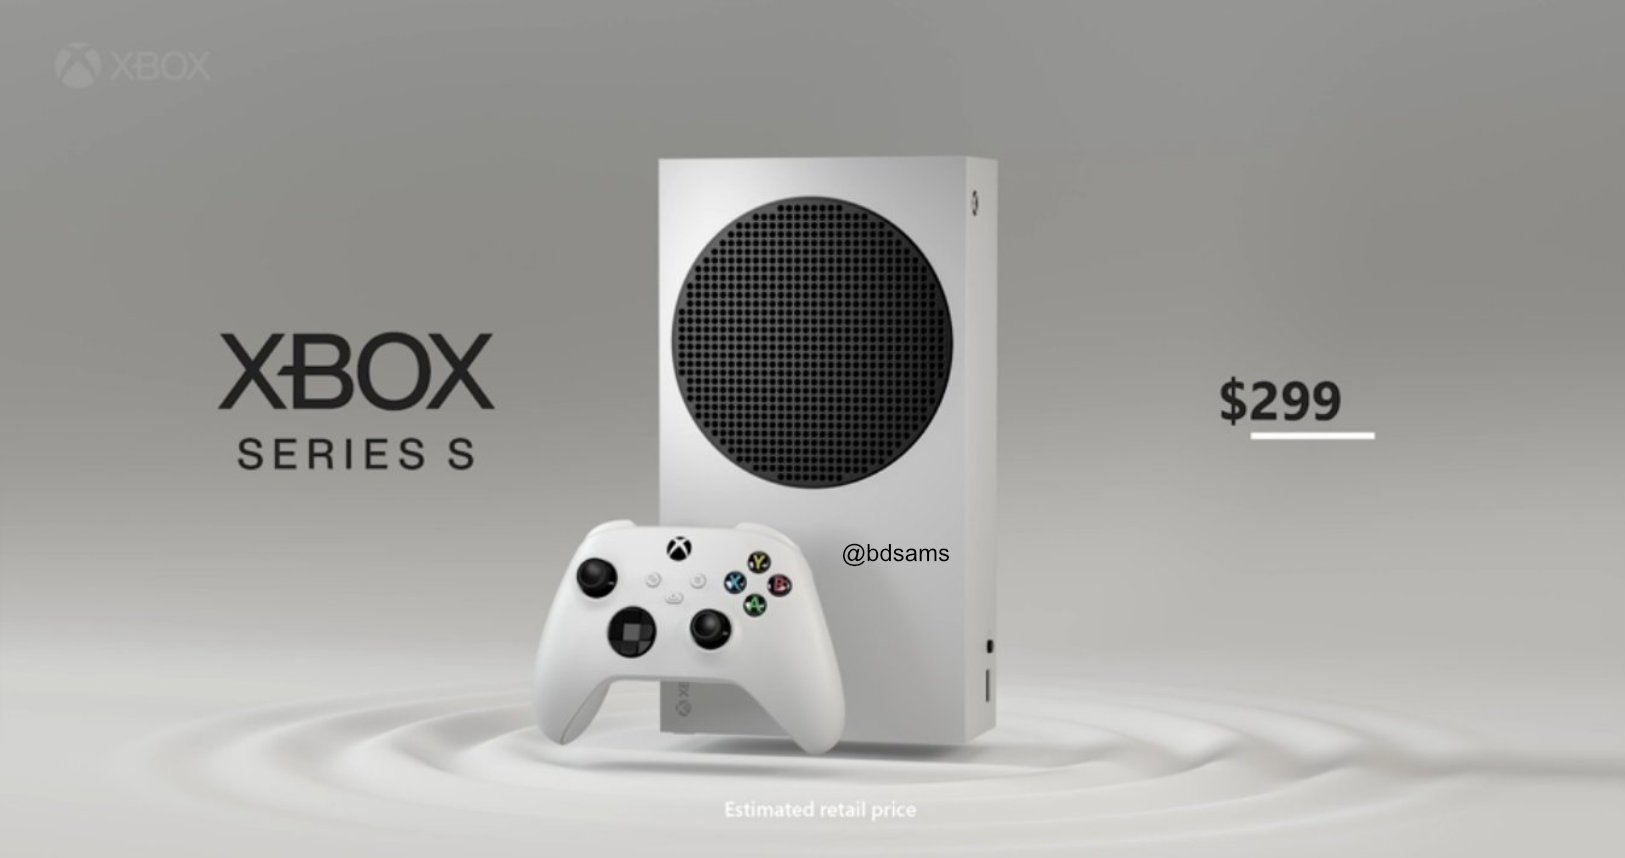 Xbox Series Xのリリース時期と価格、ついにリークされる - GAME Watch